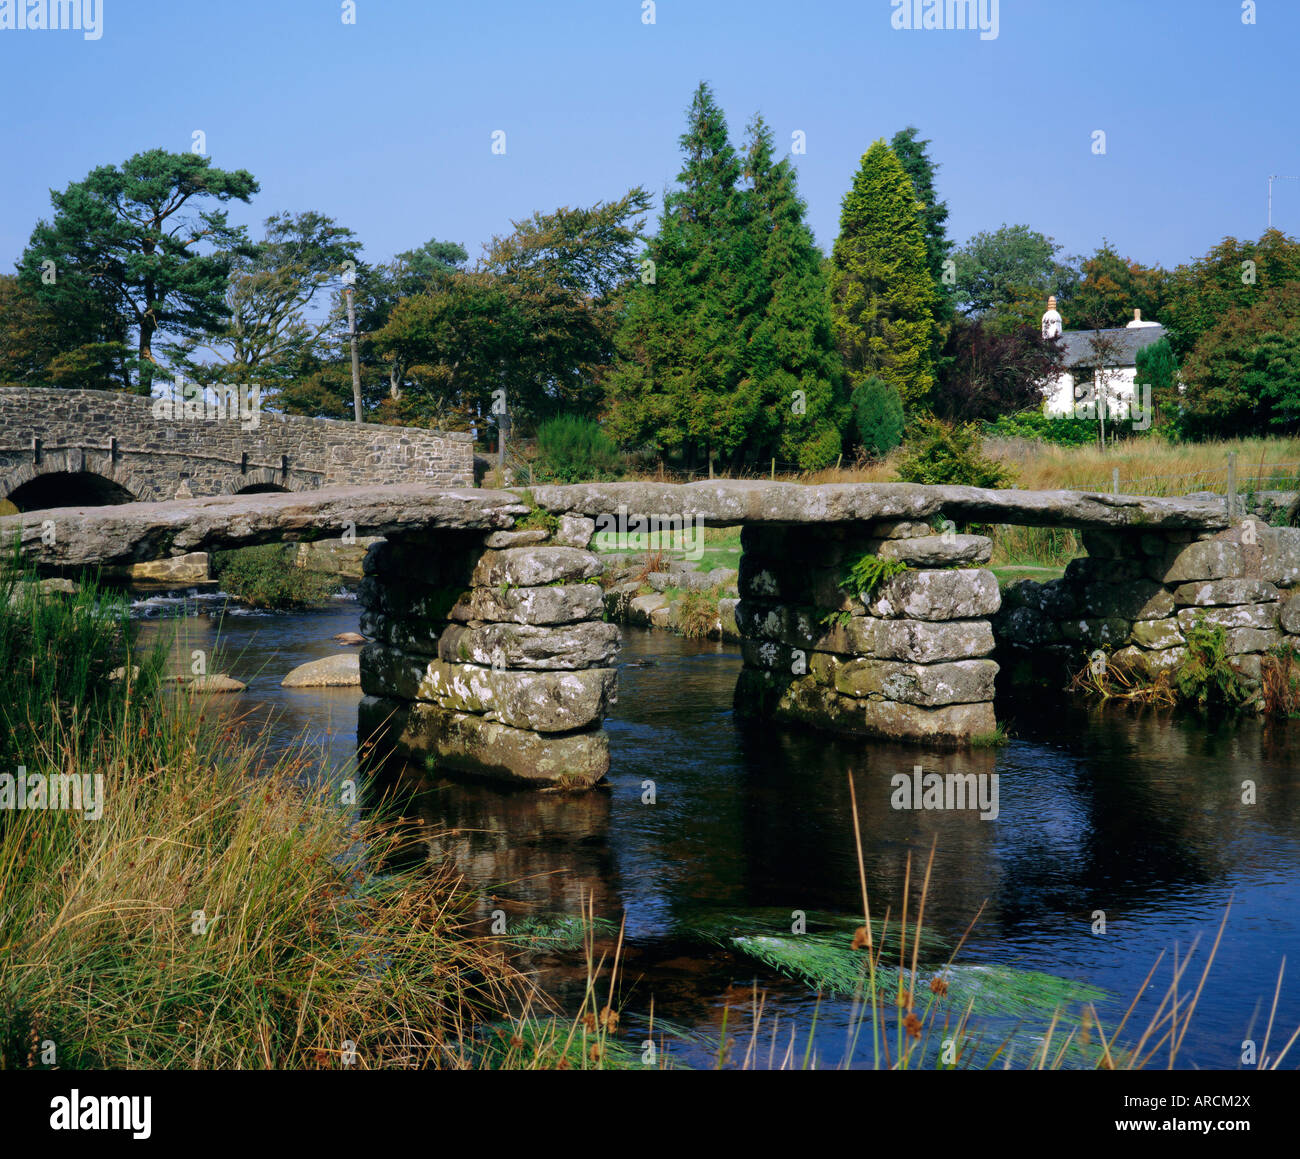 Clapper Bridge, Postbridge, Dartmoor, dans le Devon, England, UK Banque D'Images